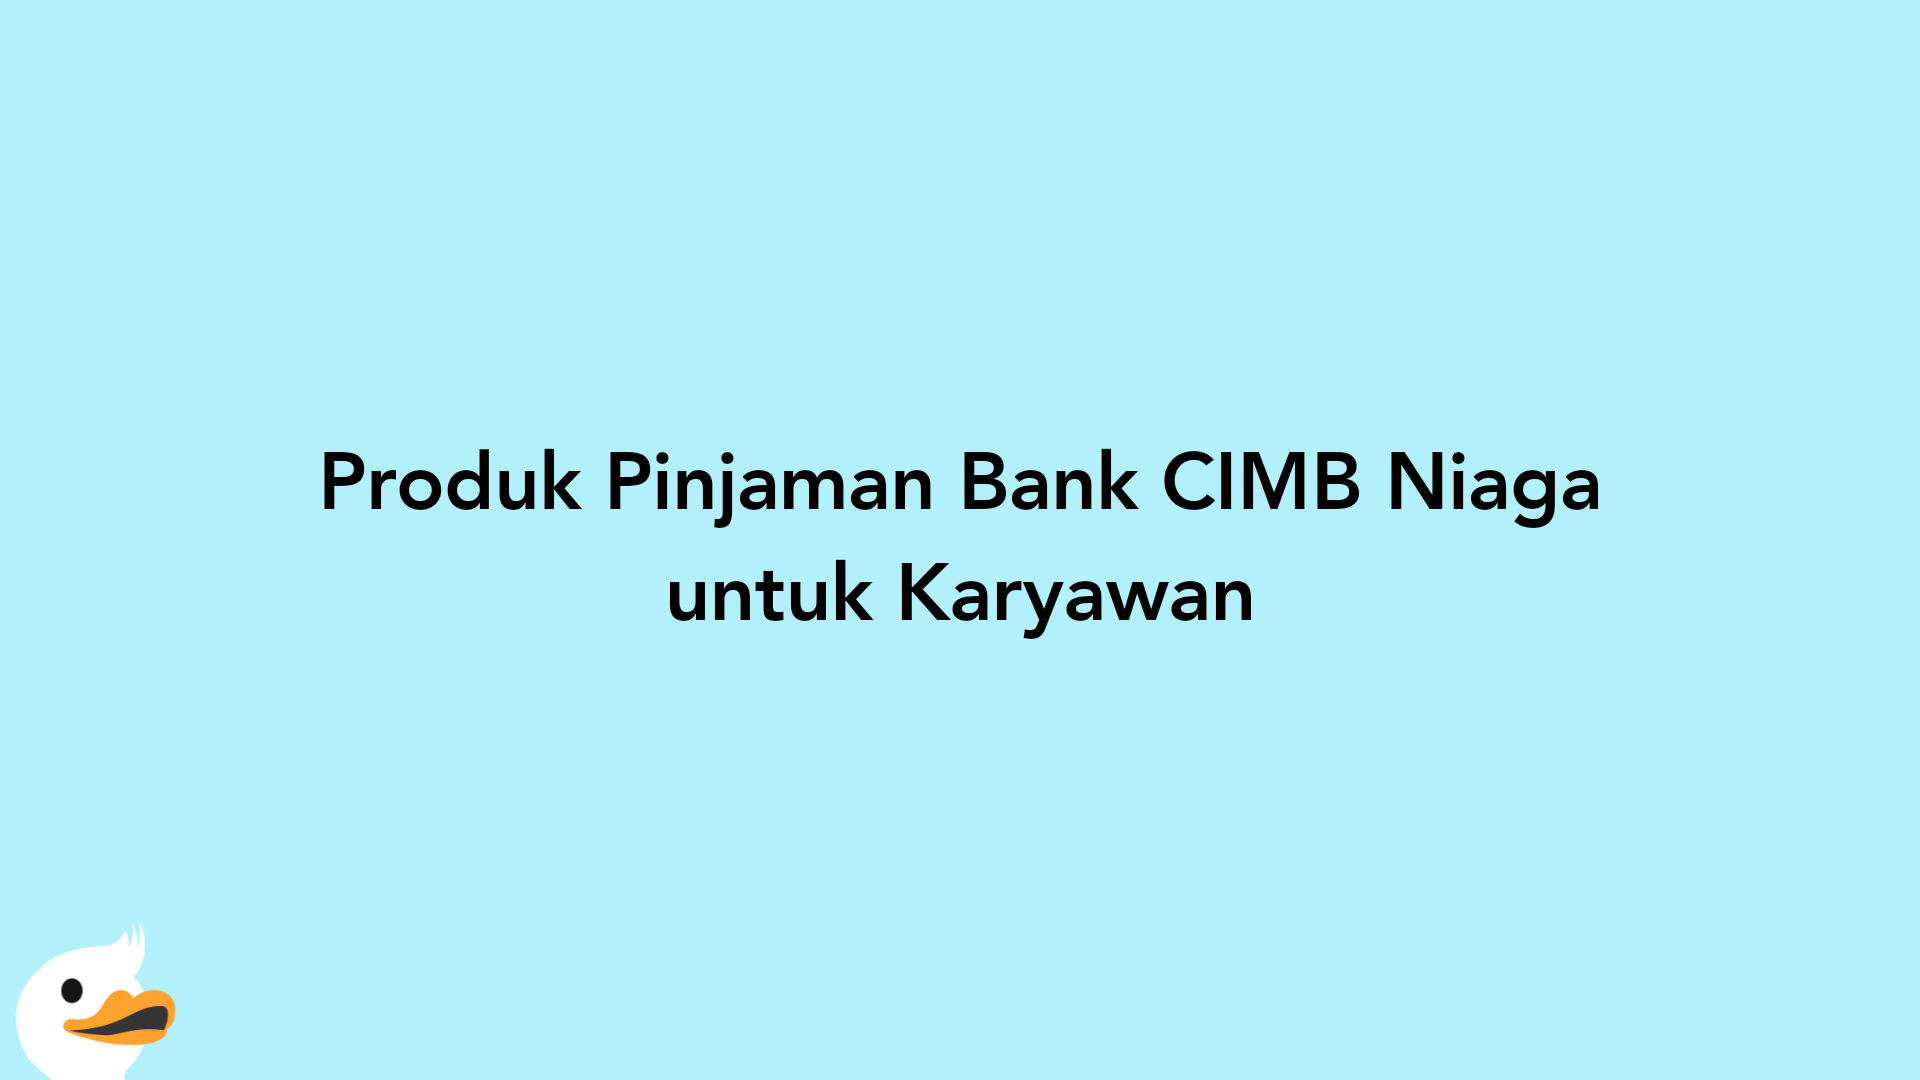 Produk Pinjaman Bank CIMB Niaga untuk Karyawan